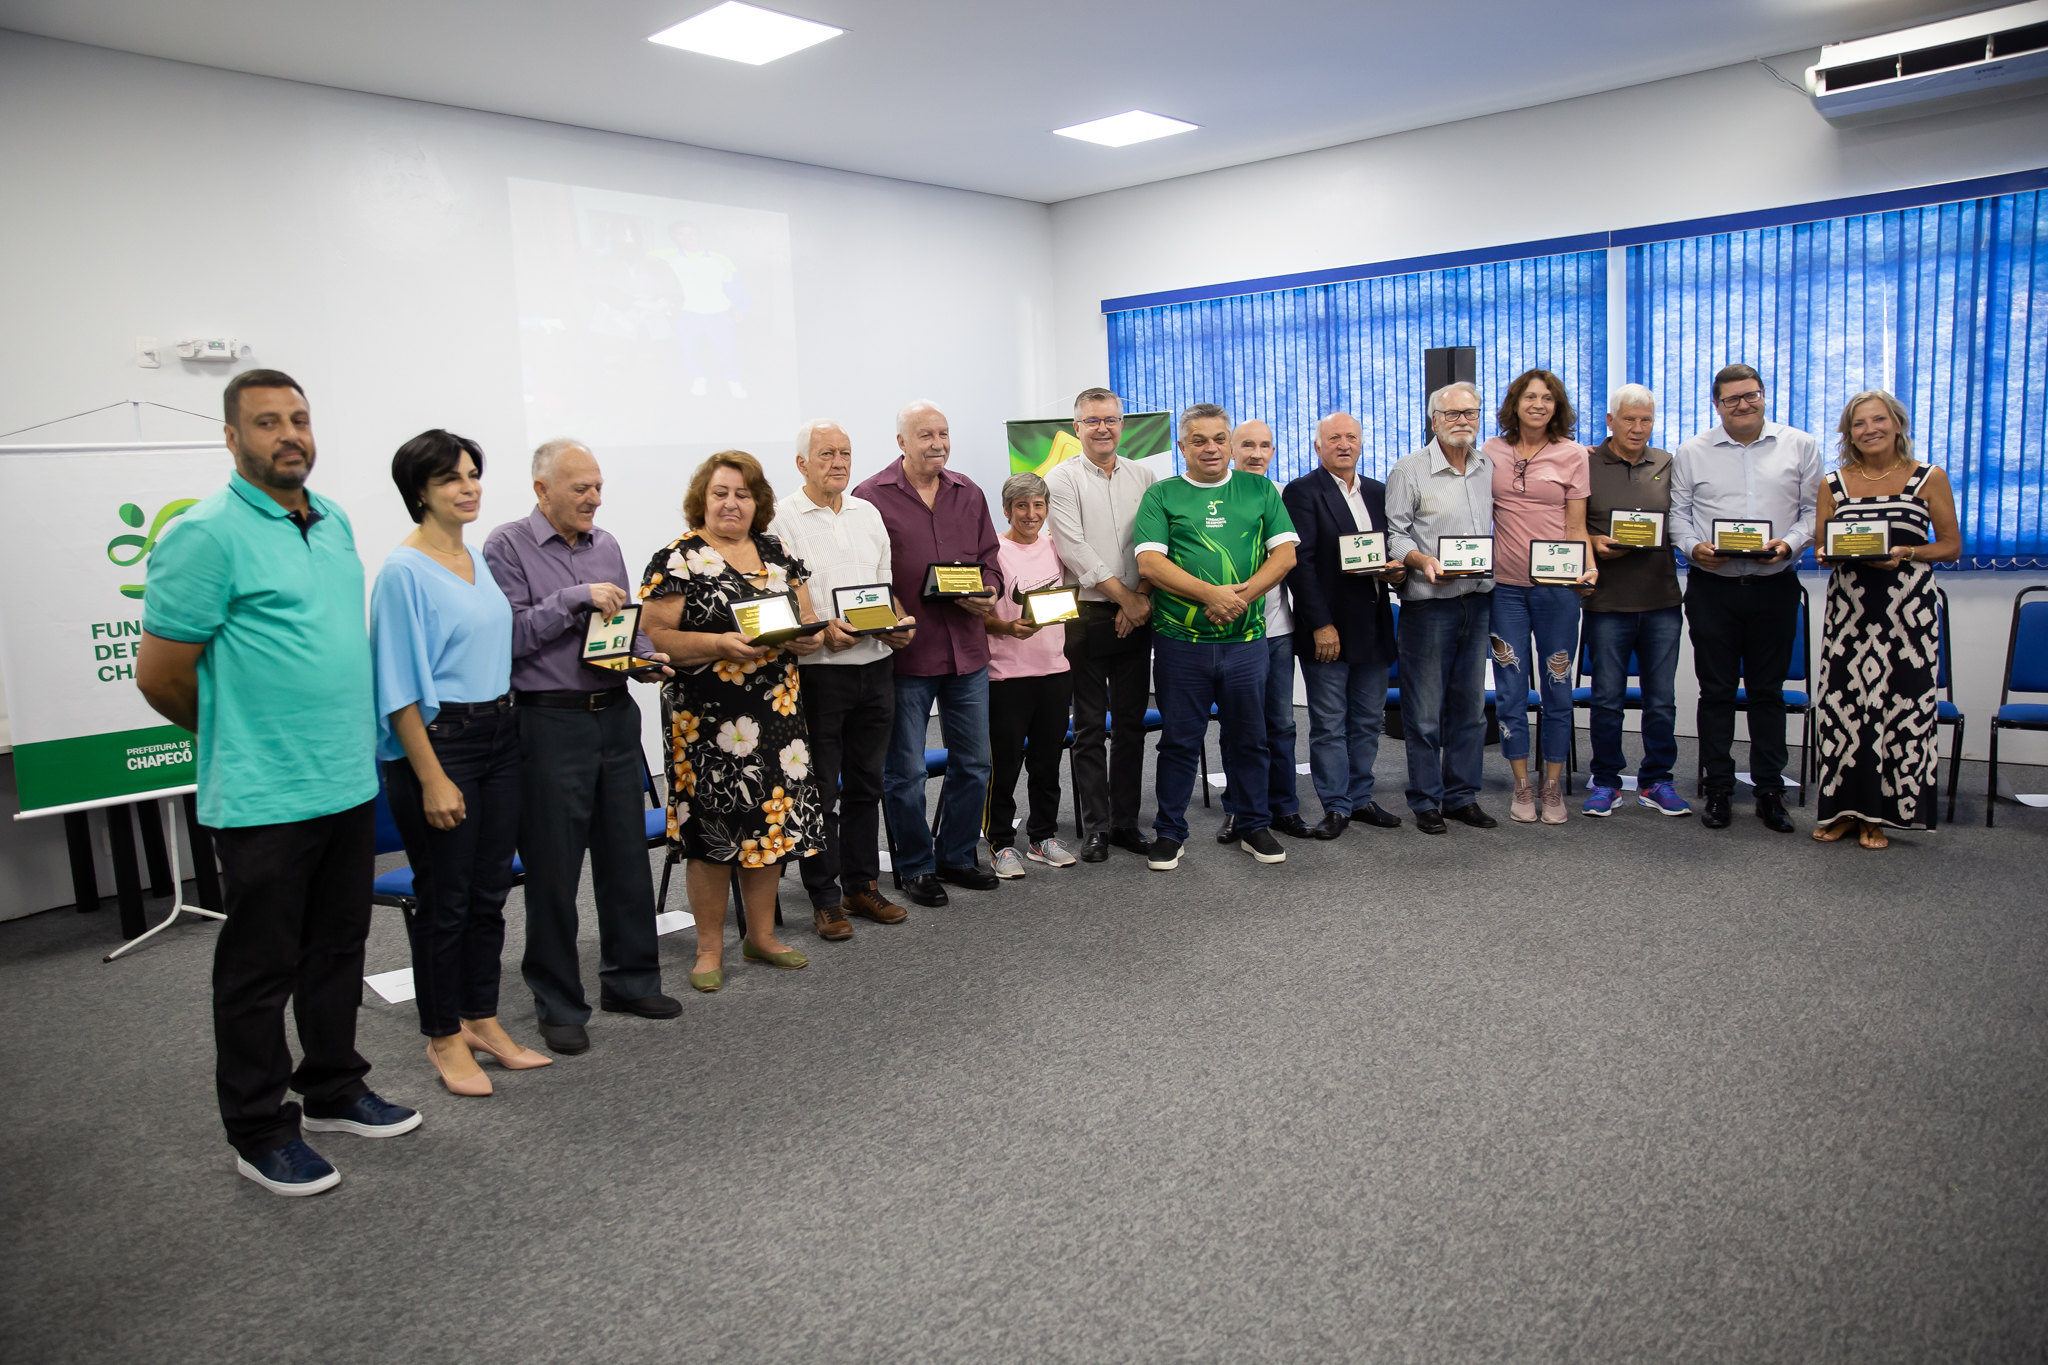 Colégio Marista Brasília apresenta campeão brasileiro de xadrez